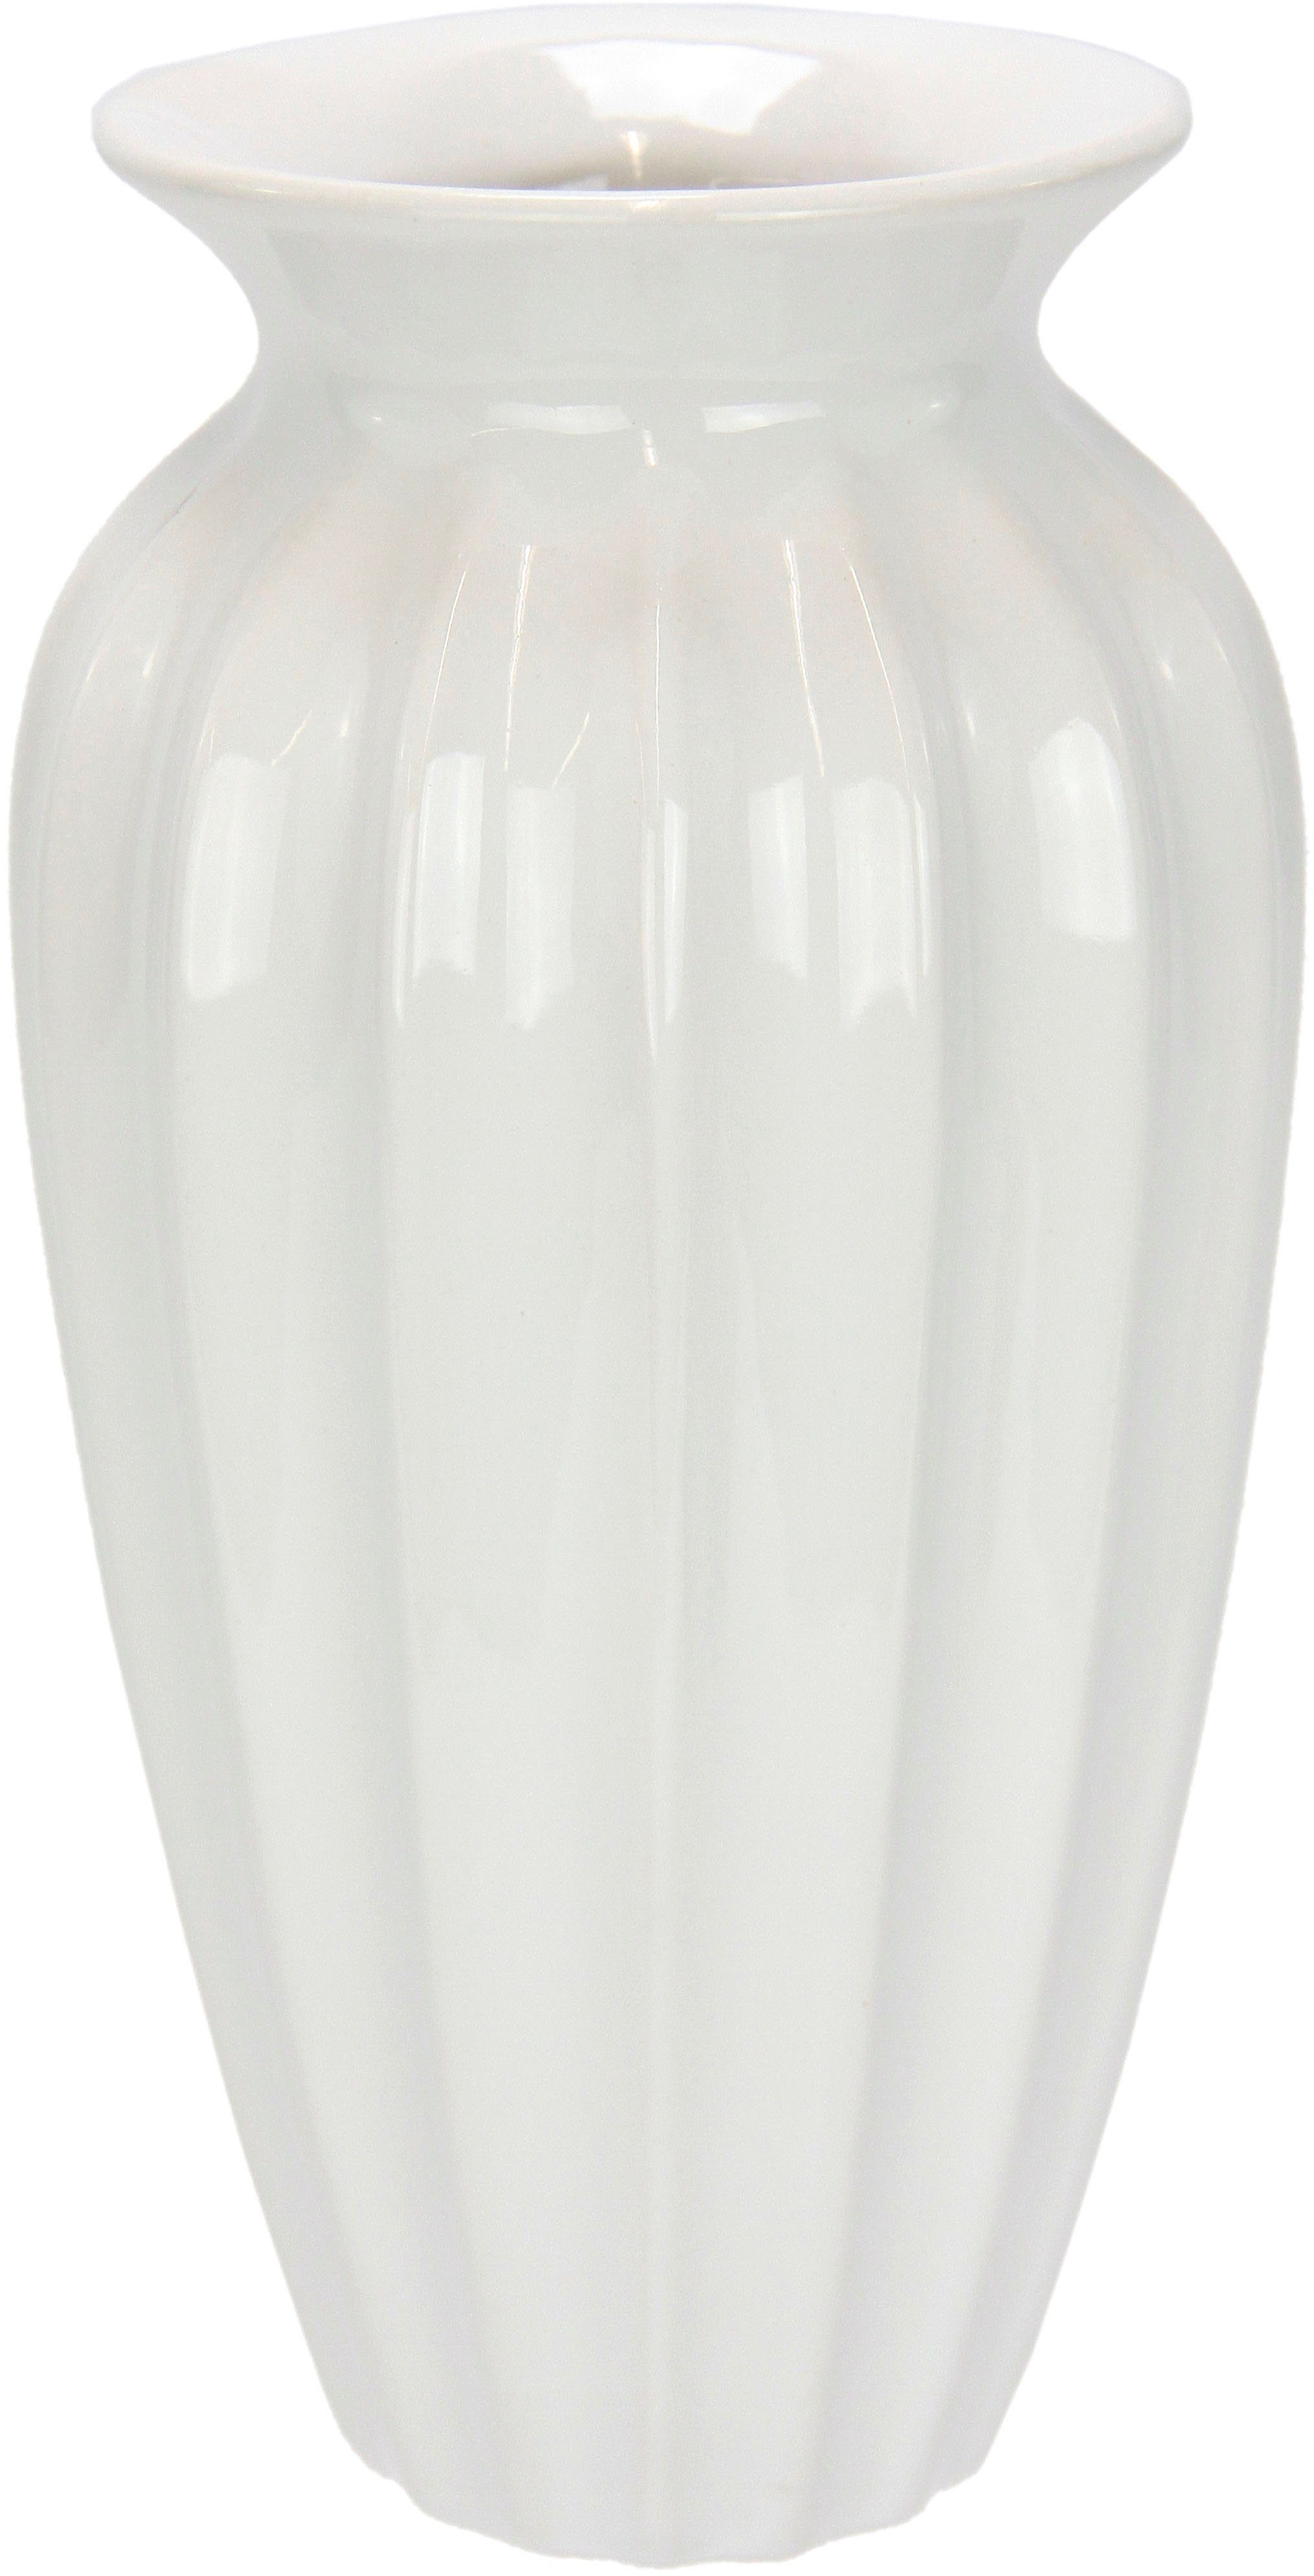 I.GE.A. Dekovase Keramik, Aus Vase, groß Keramik rund